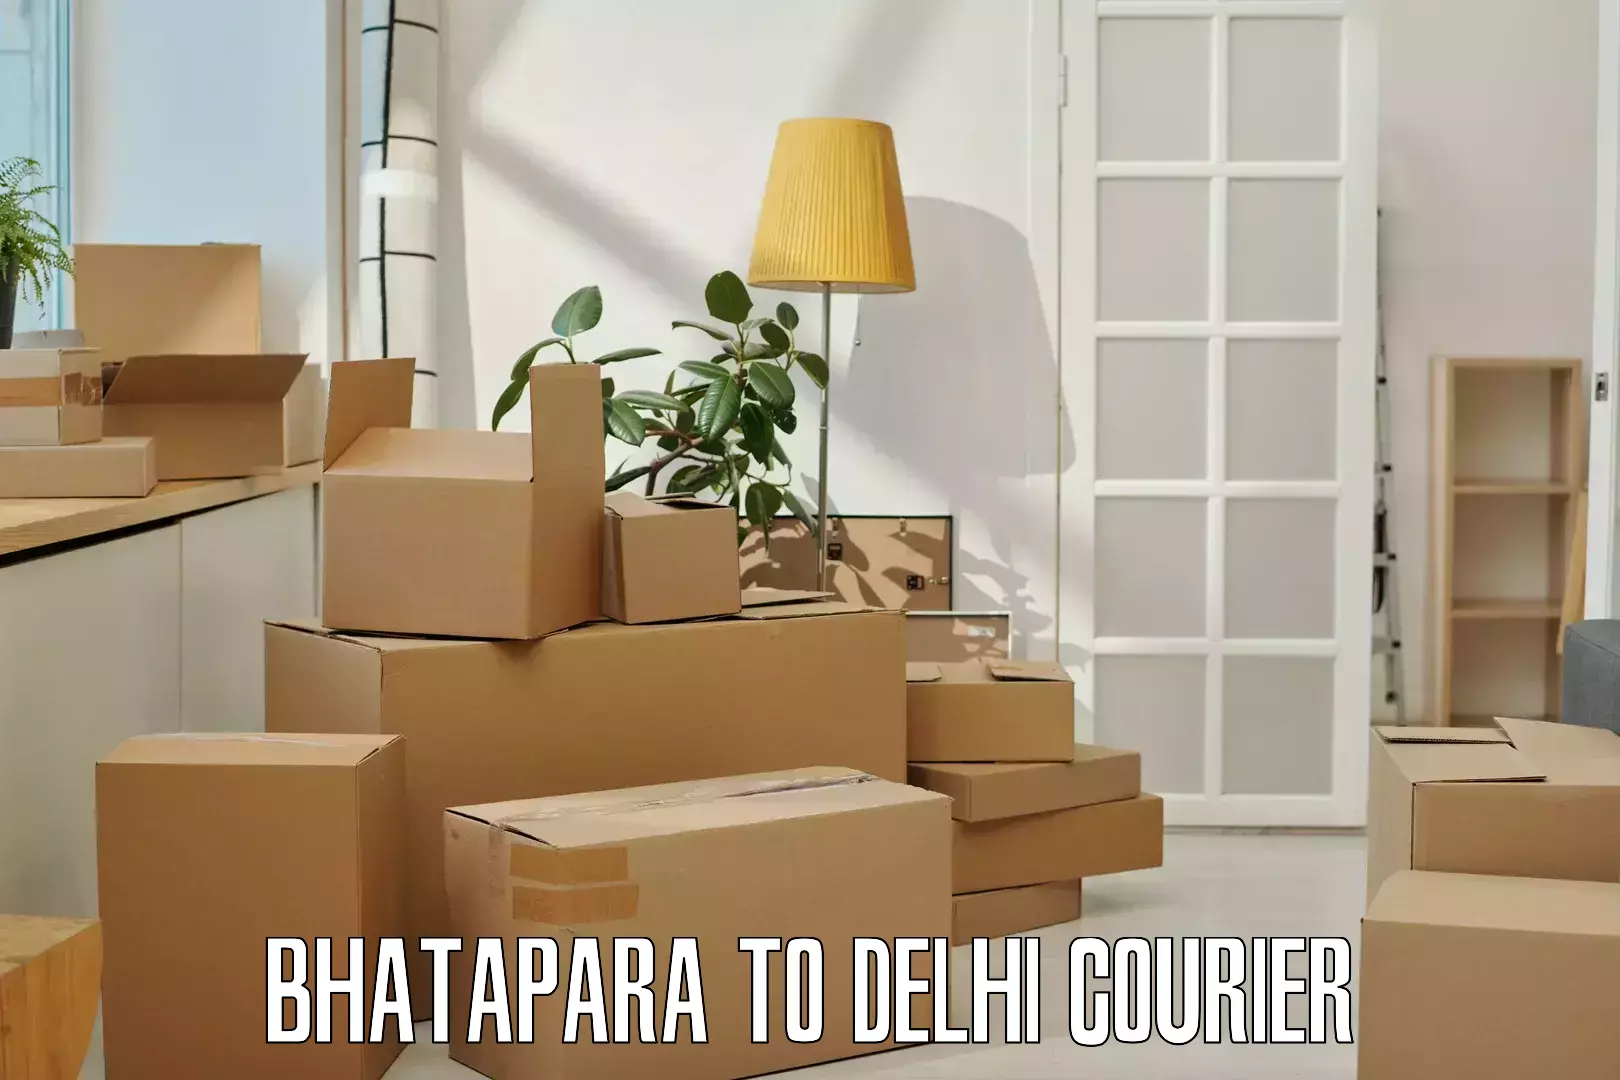 Nationwide shipping capabilities Bhatapara to Lodhi Road